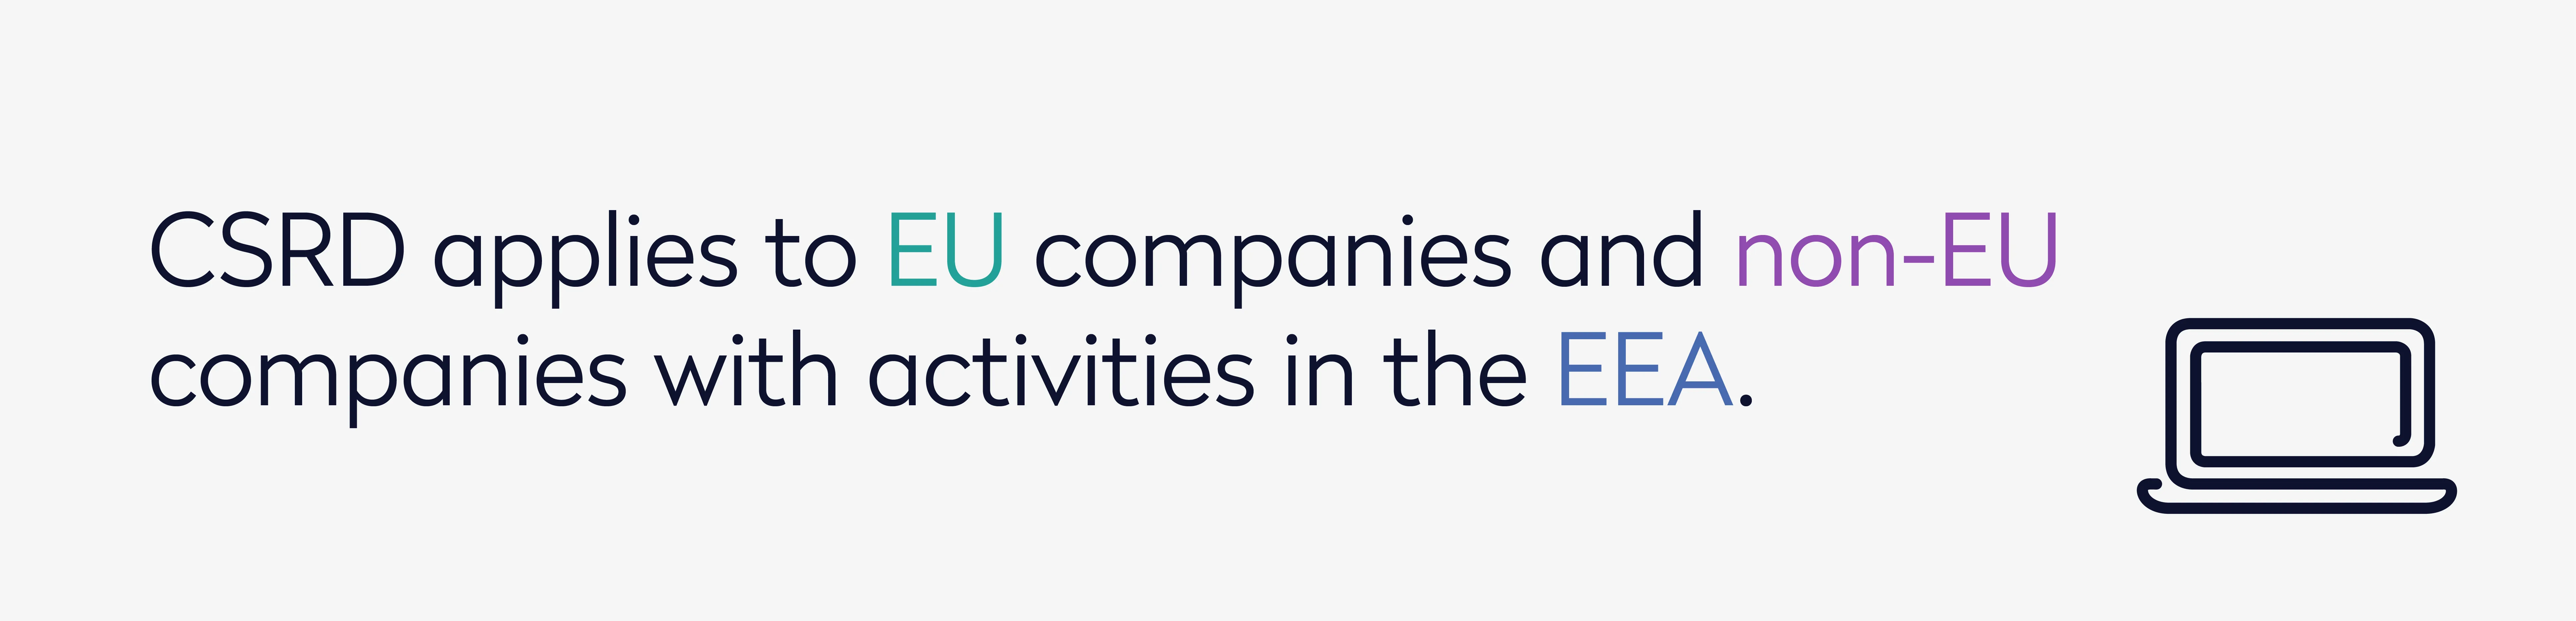 CSRD applies to EU companies and non-EU companies with activities in the EEA